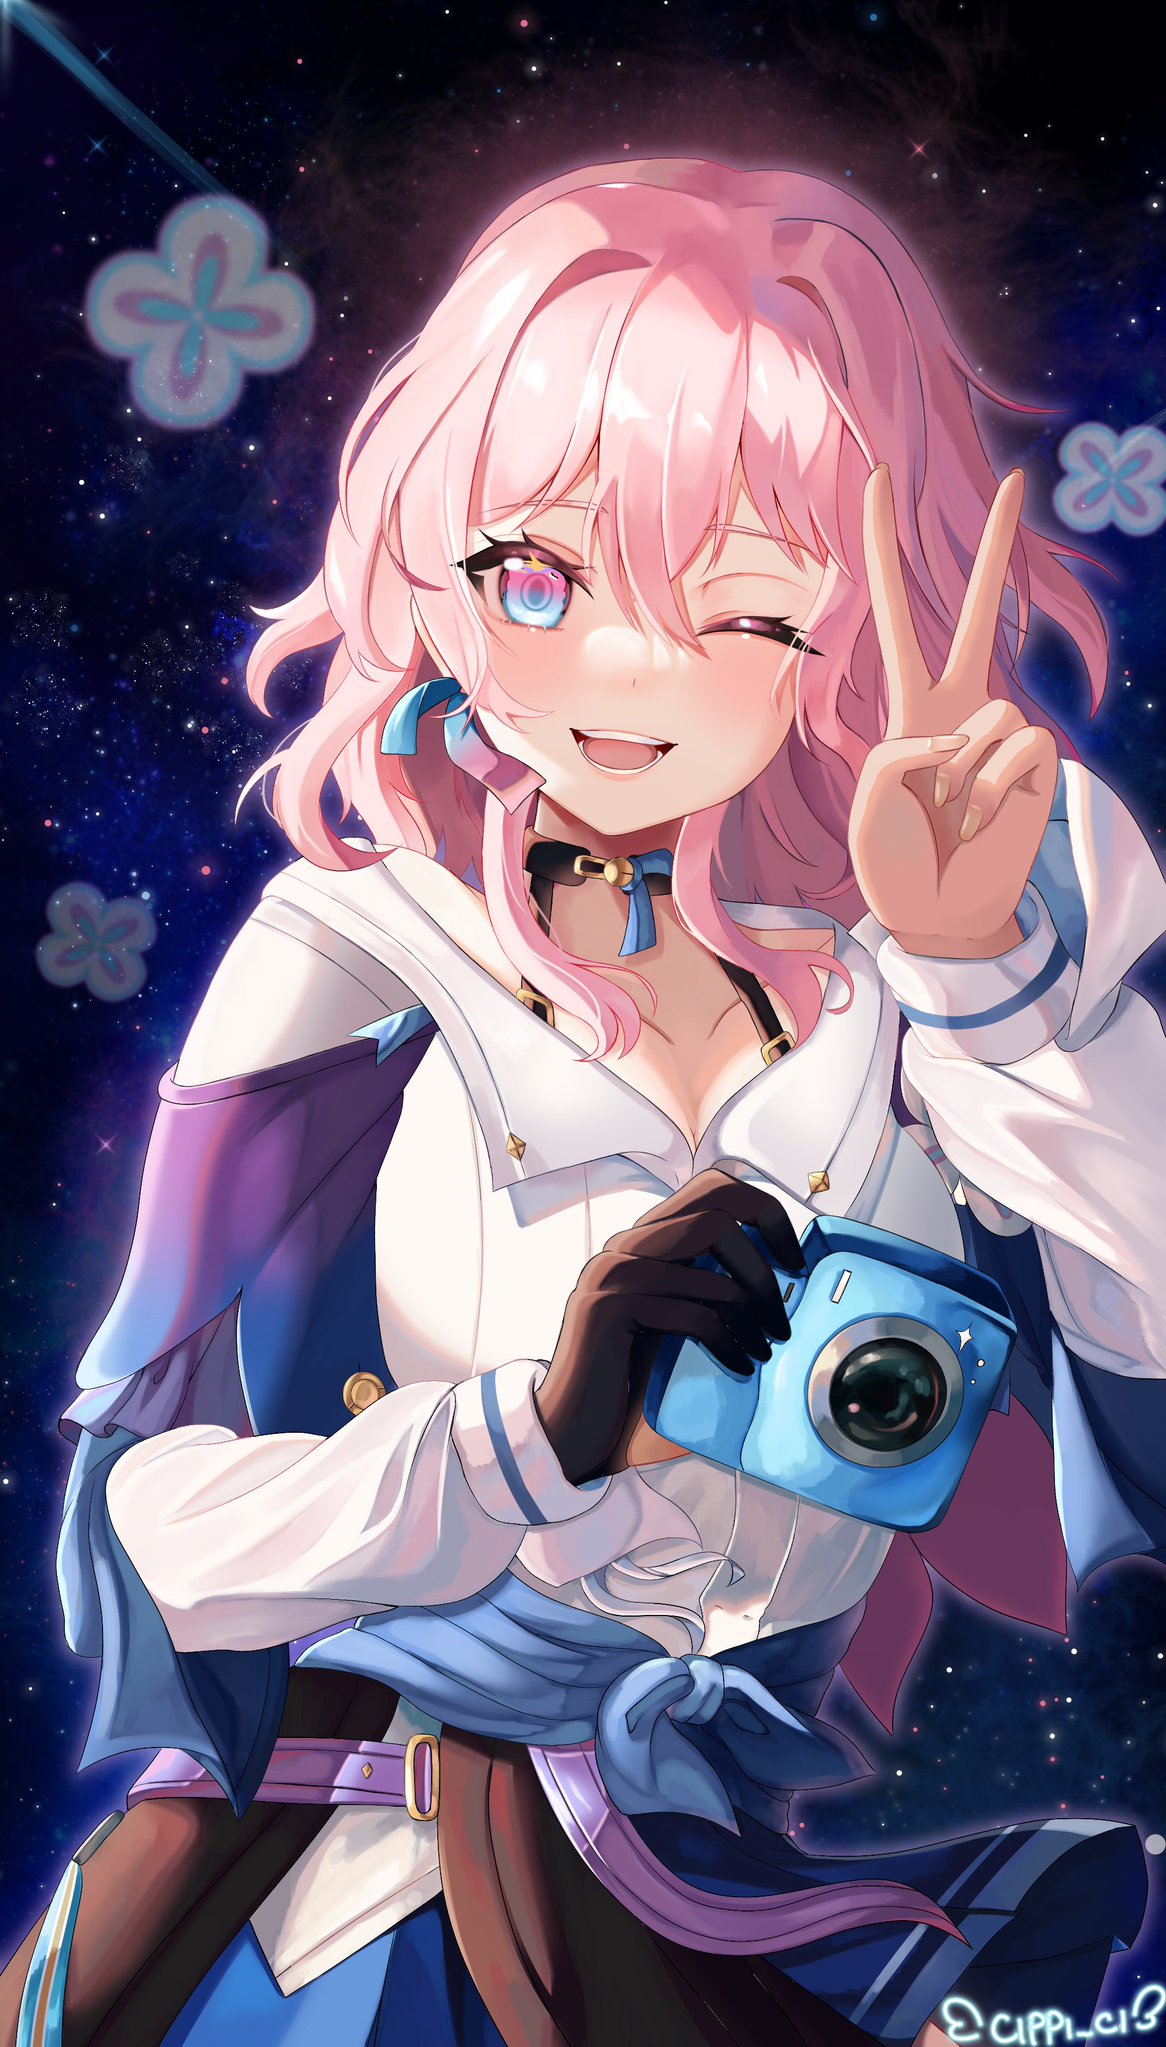 Anime Games March 7th Honkai Star Rail Portrait Display Anime Girls One Eye Closed Smiling Peace Sig 1166x2047